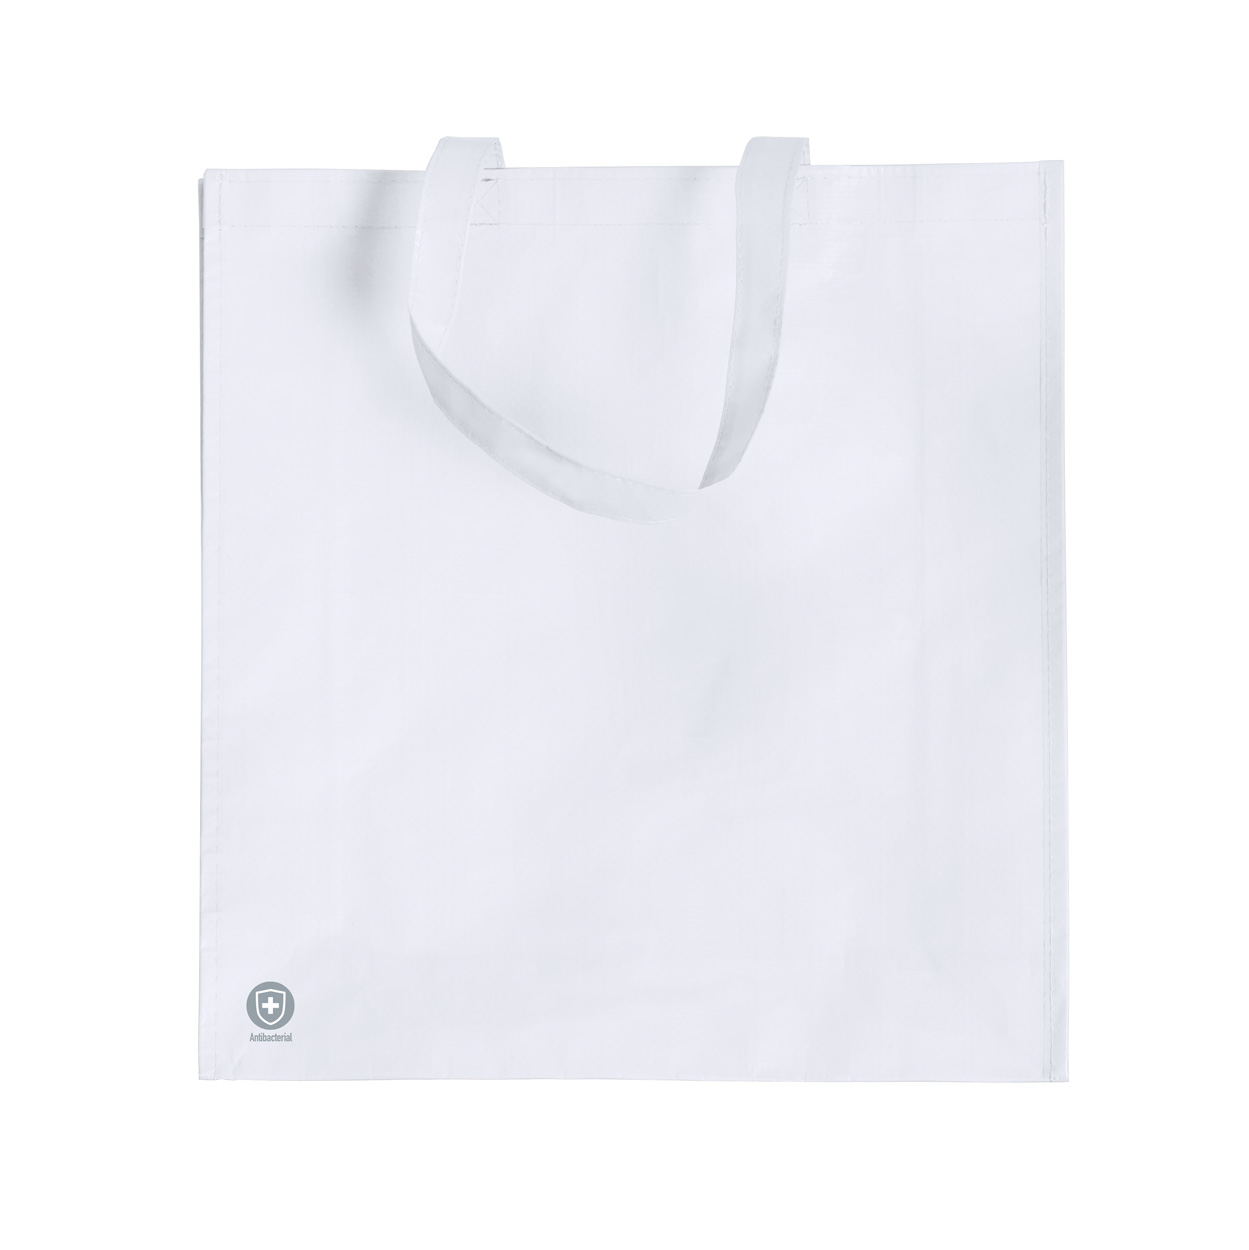 Kiarax antibakteriální nákupní taška - bílá